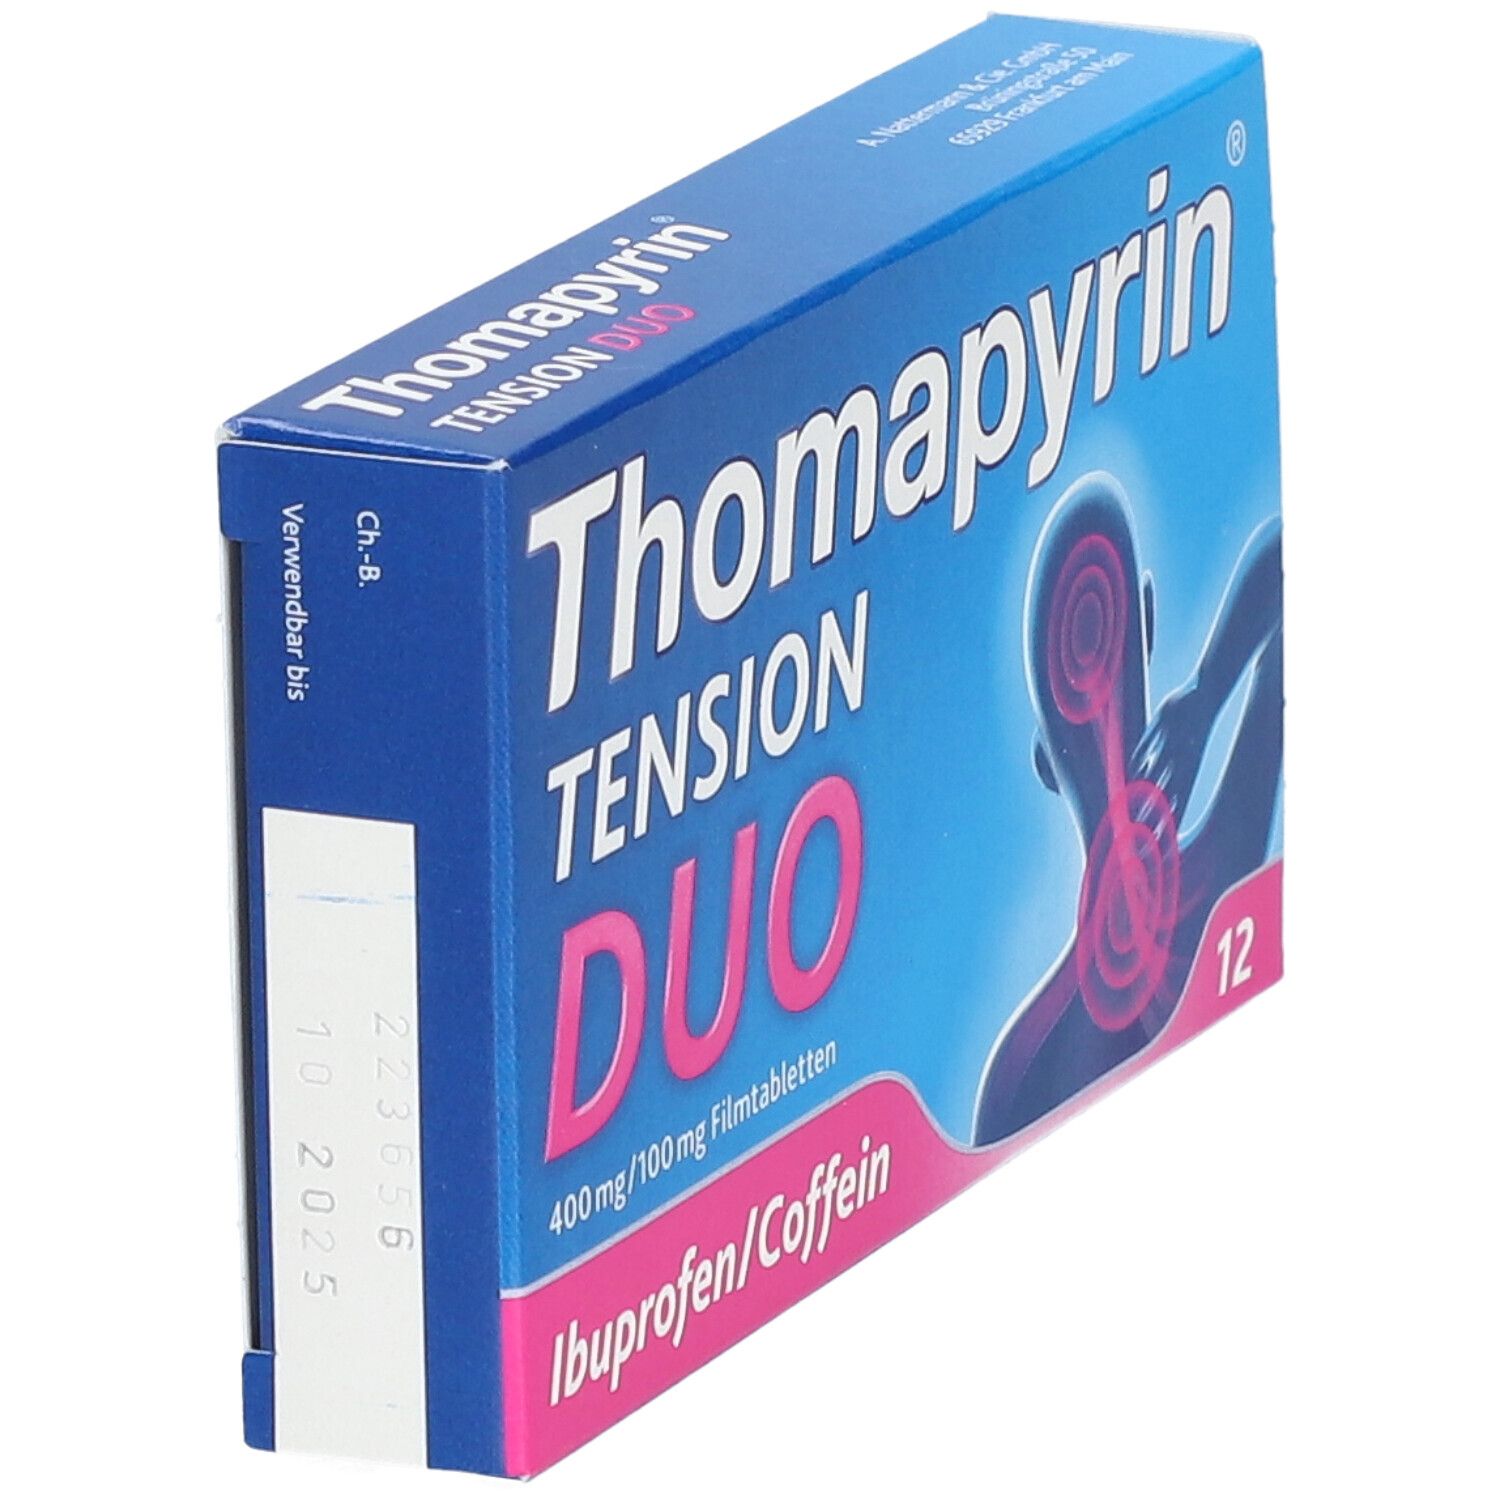 Thomapyrin TENSION DUO bei Kopfschmerzen: Ibuprofen/Coffein